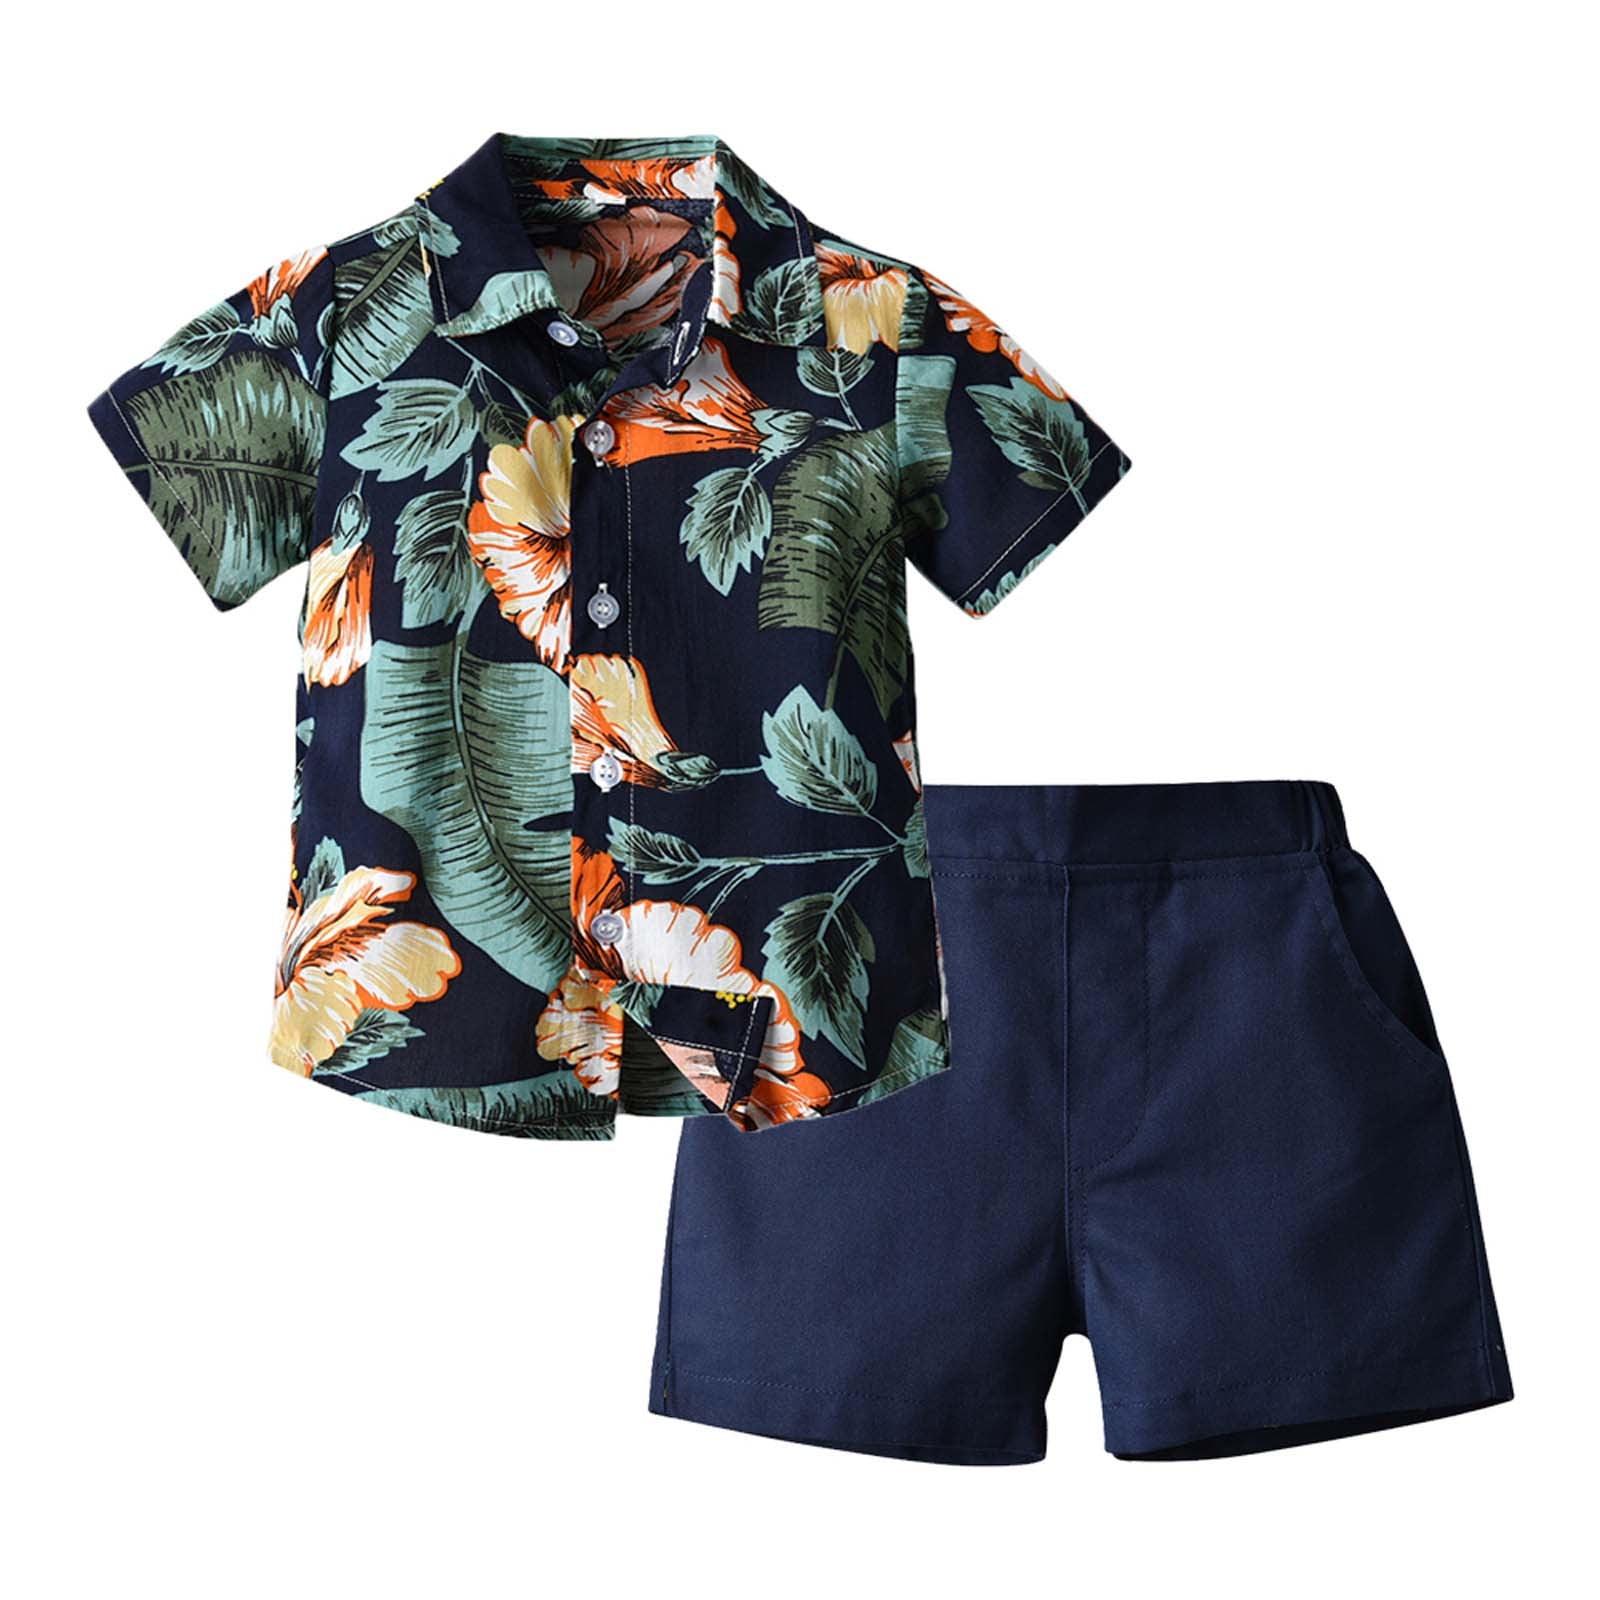 Penkiiy Boys Casual Short Sleeve Round-Neck Printing Shirts+Short Pants ...